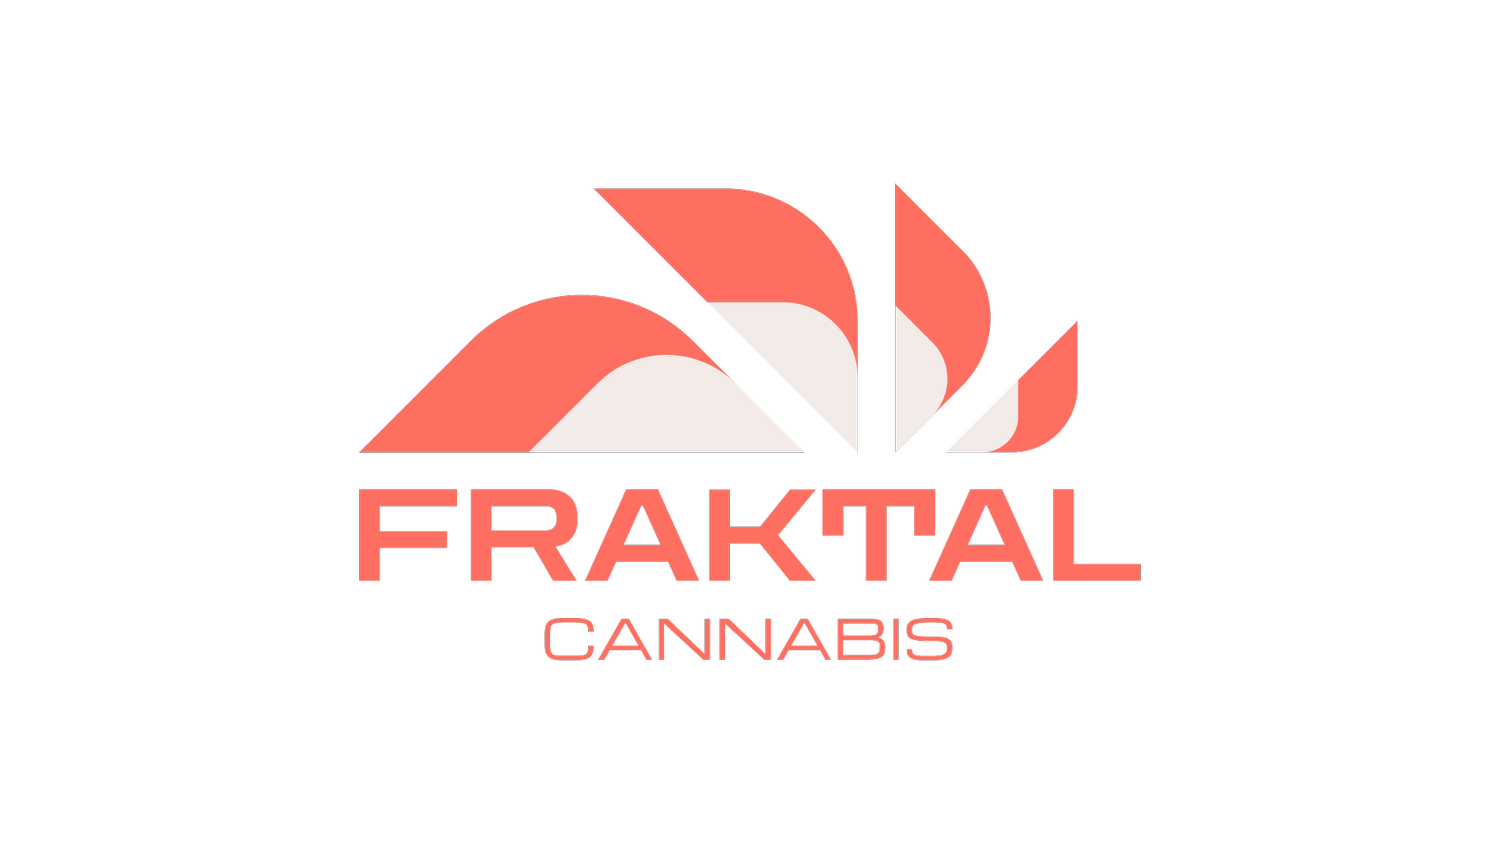 Fraktal Cannabis